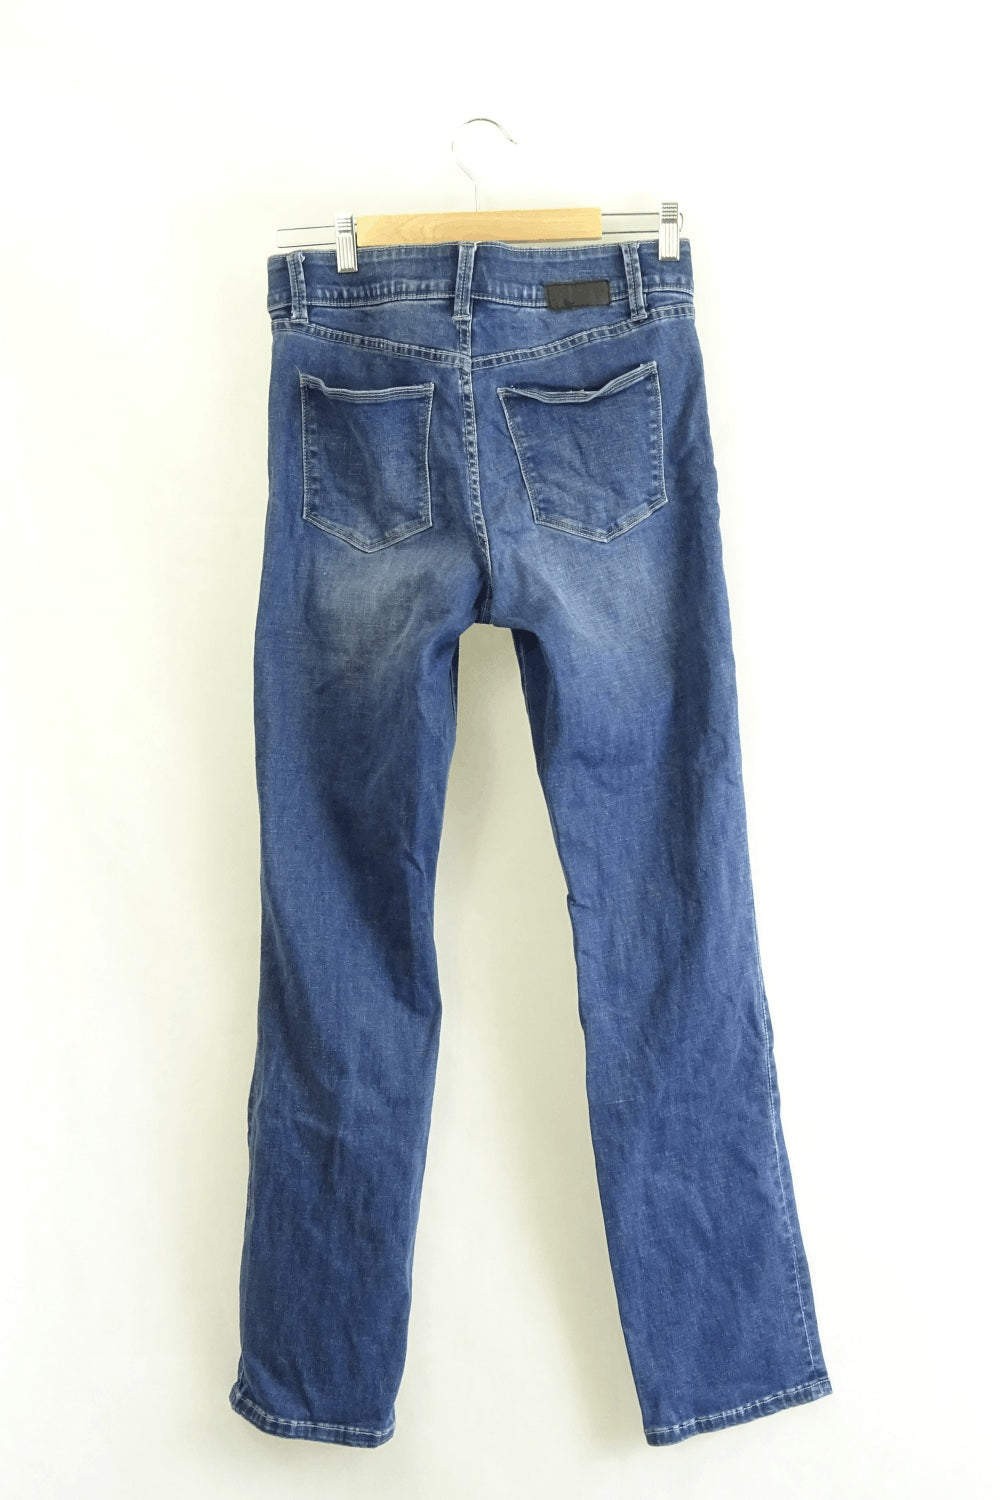 Jeanswest Blue Jeans 11